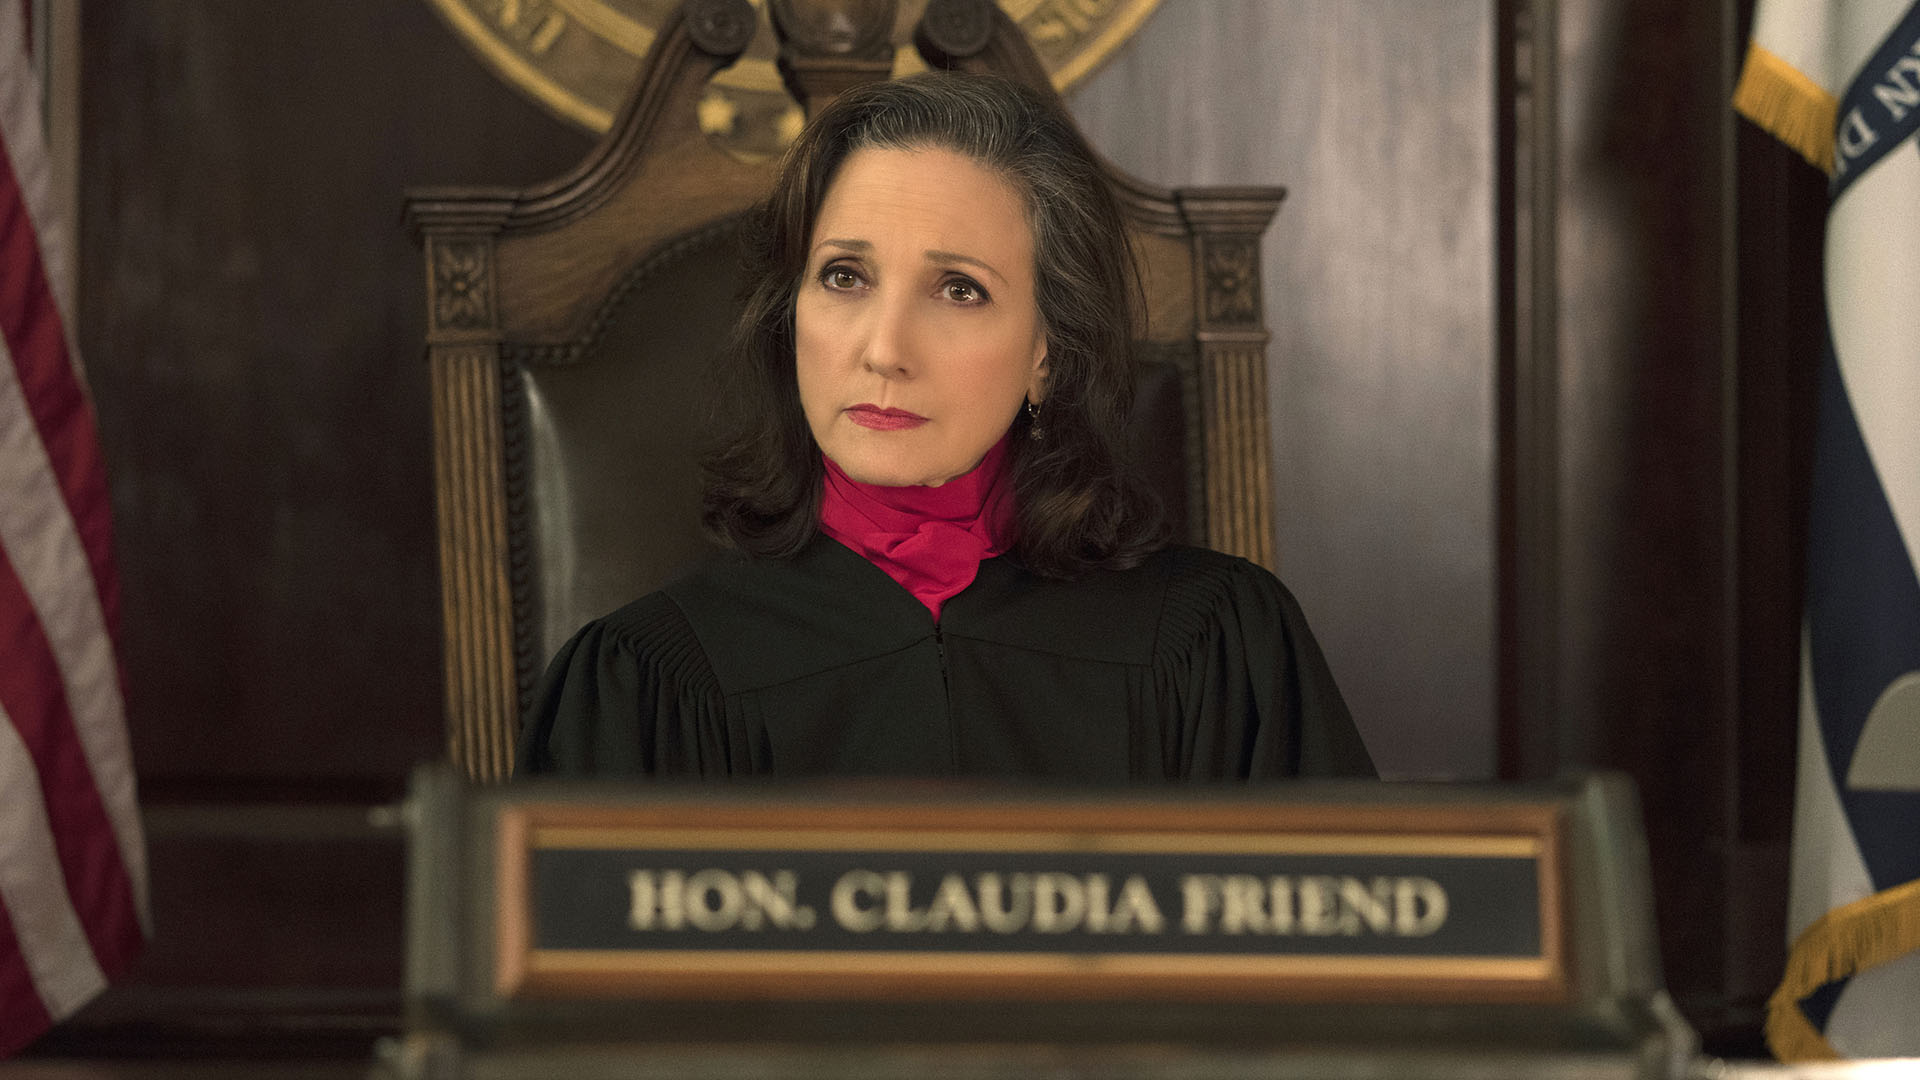 Bebe Neuwirth as Judge Claudia Friend